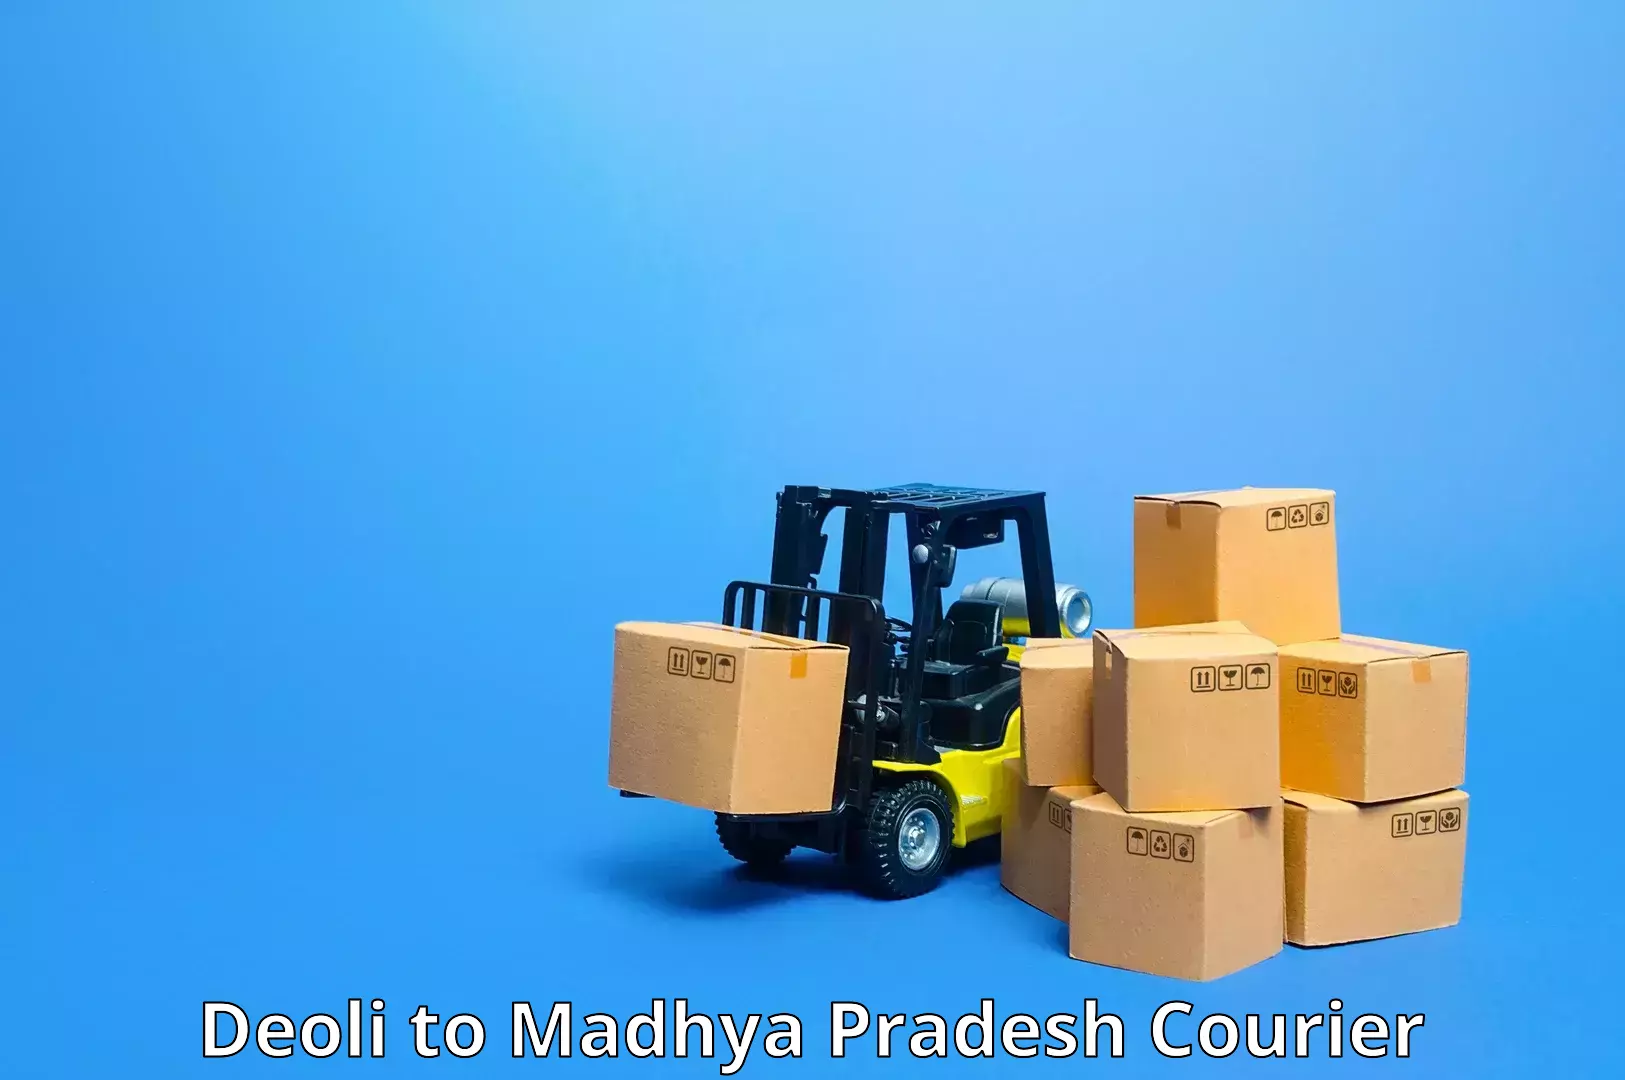 Express logistics providers Deoli to Vidisha